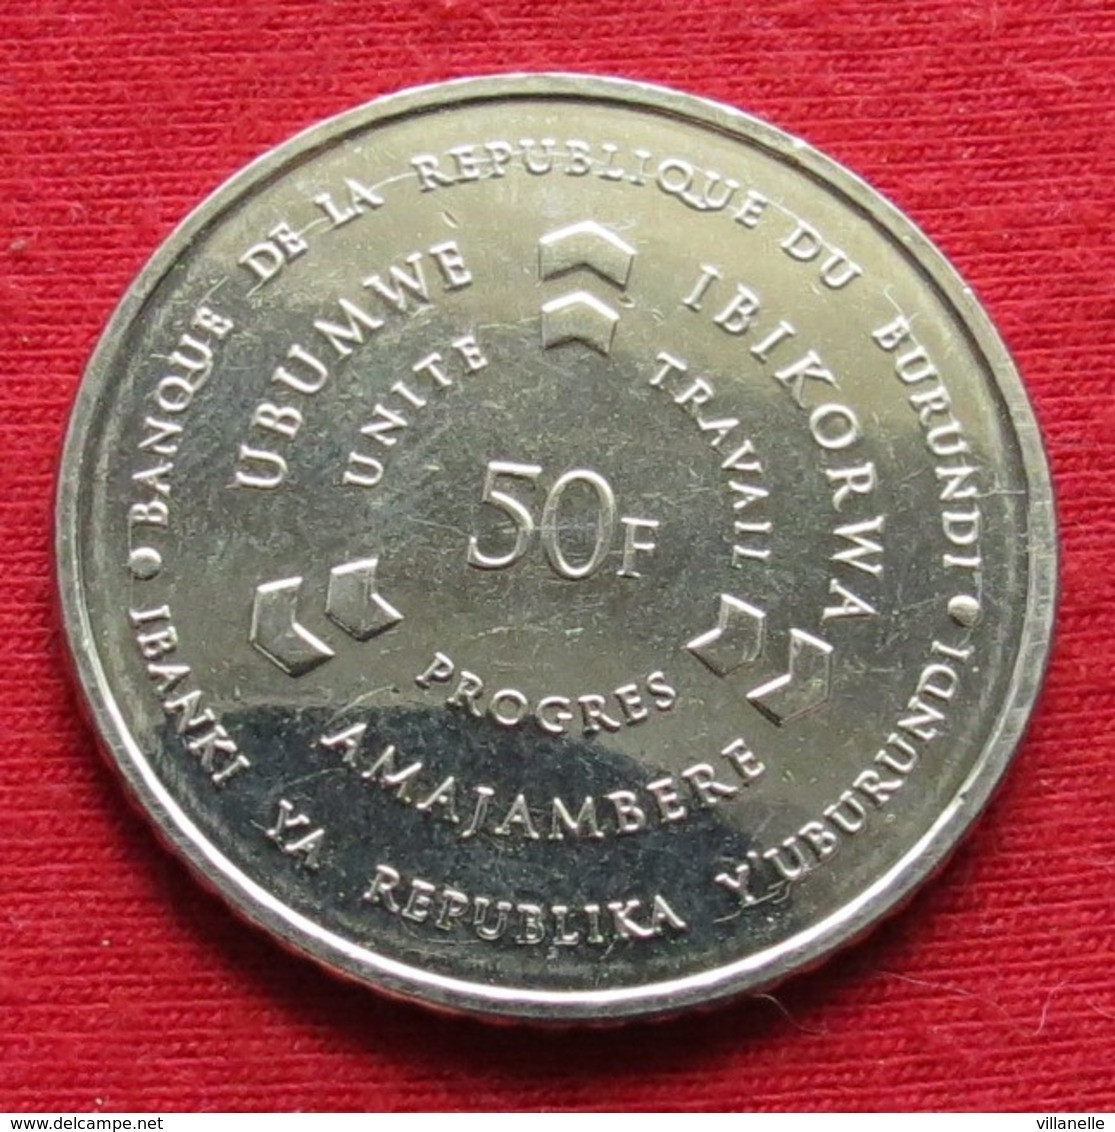 Burundi 50 Francs 2011 UNC ºº - Burundi